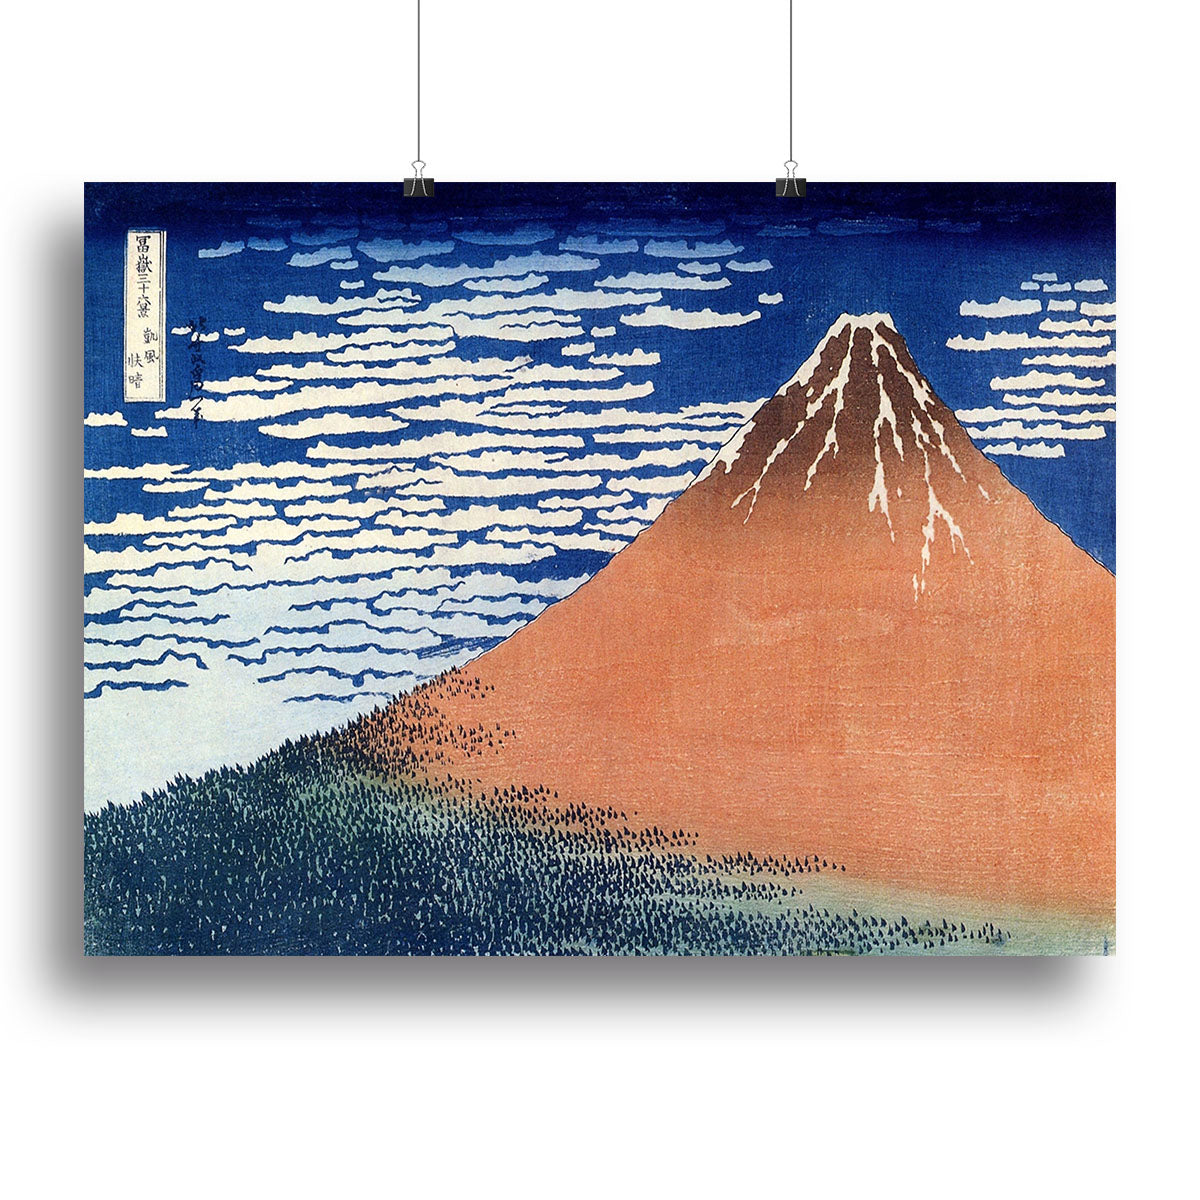 Mount Fuji by Hokusai Canvas Print or Poster - Canvas Art Rocks - 2